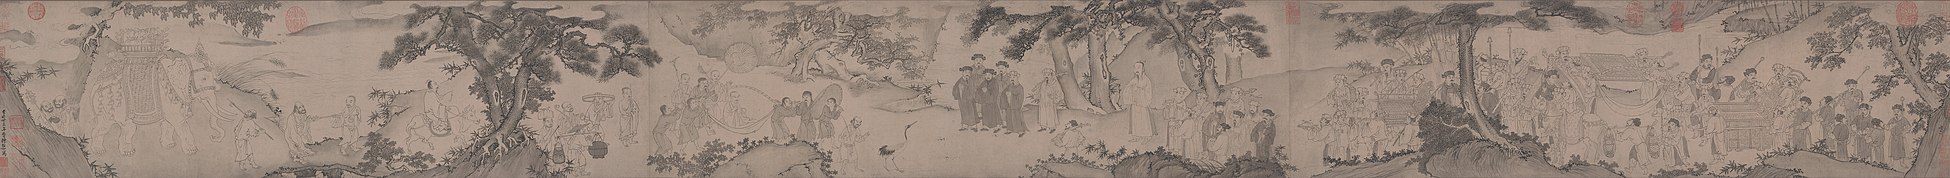 The Mahasattva of Truc Lam leaves the Mountain 竹林大士出山圖